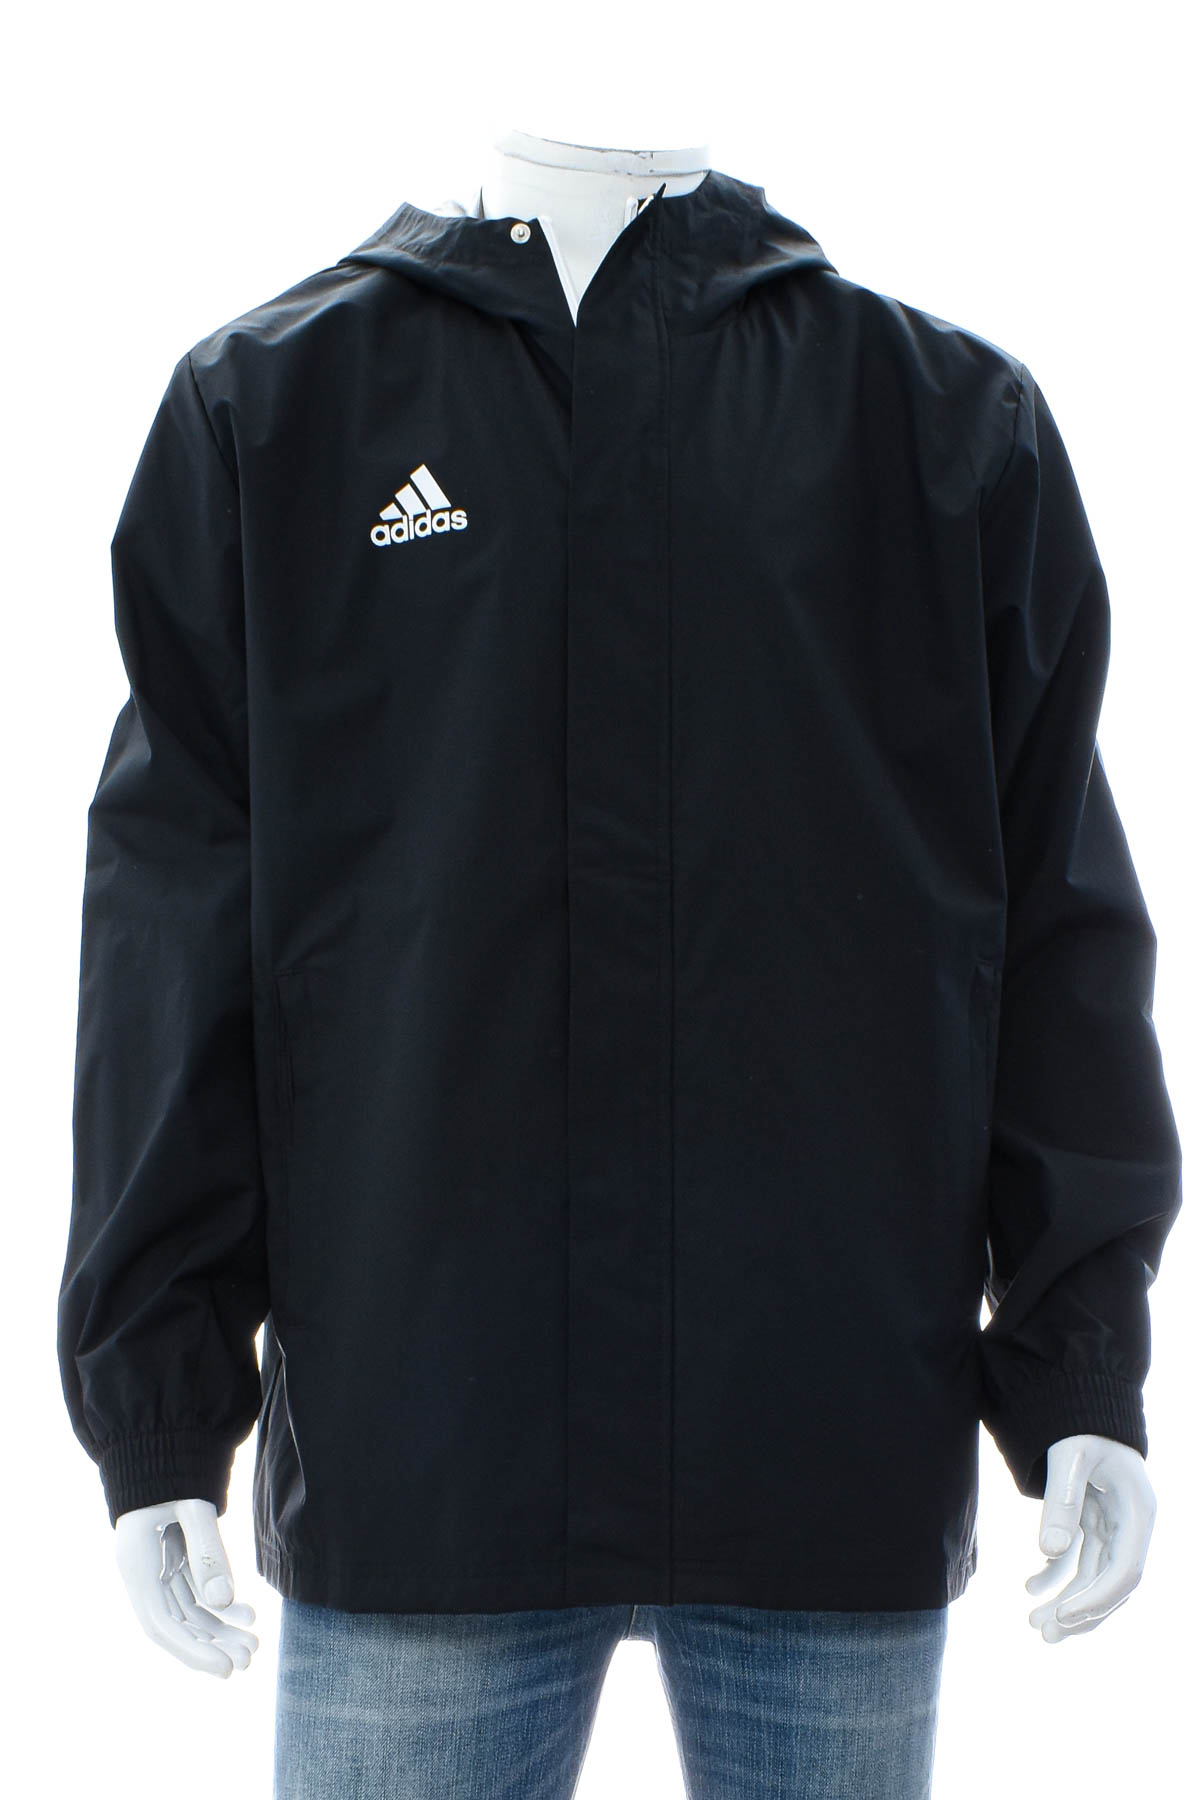 Men's jacket - Adidas - 0